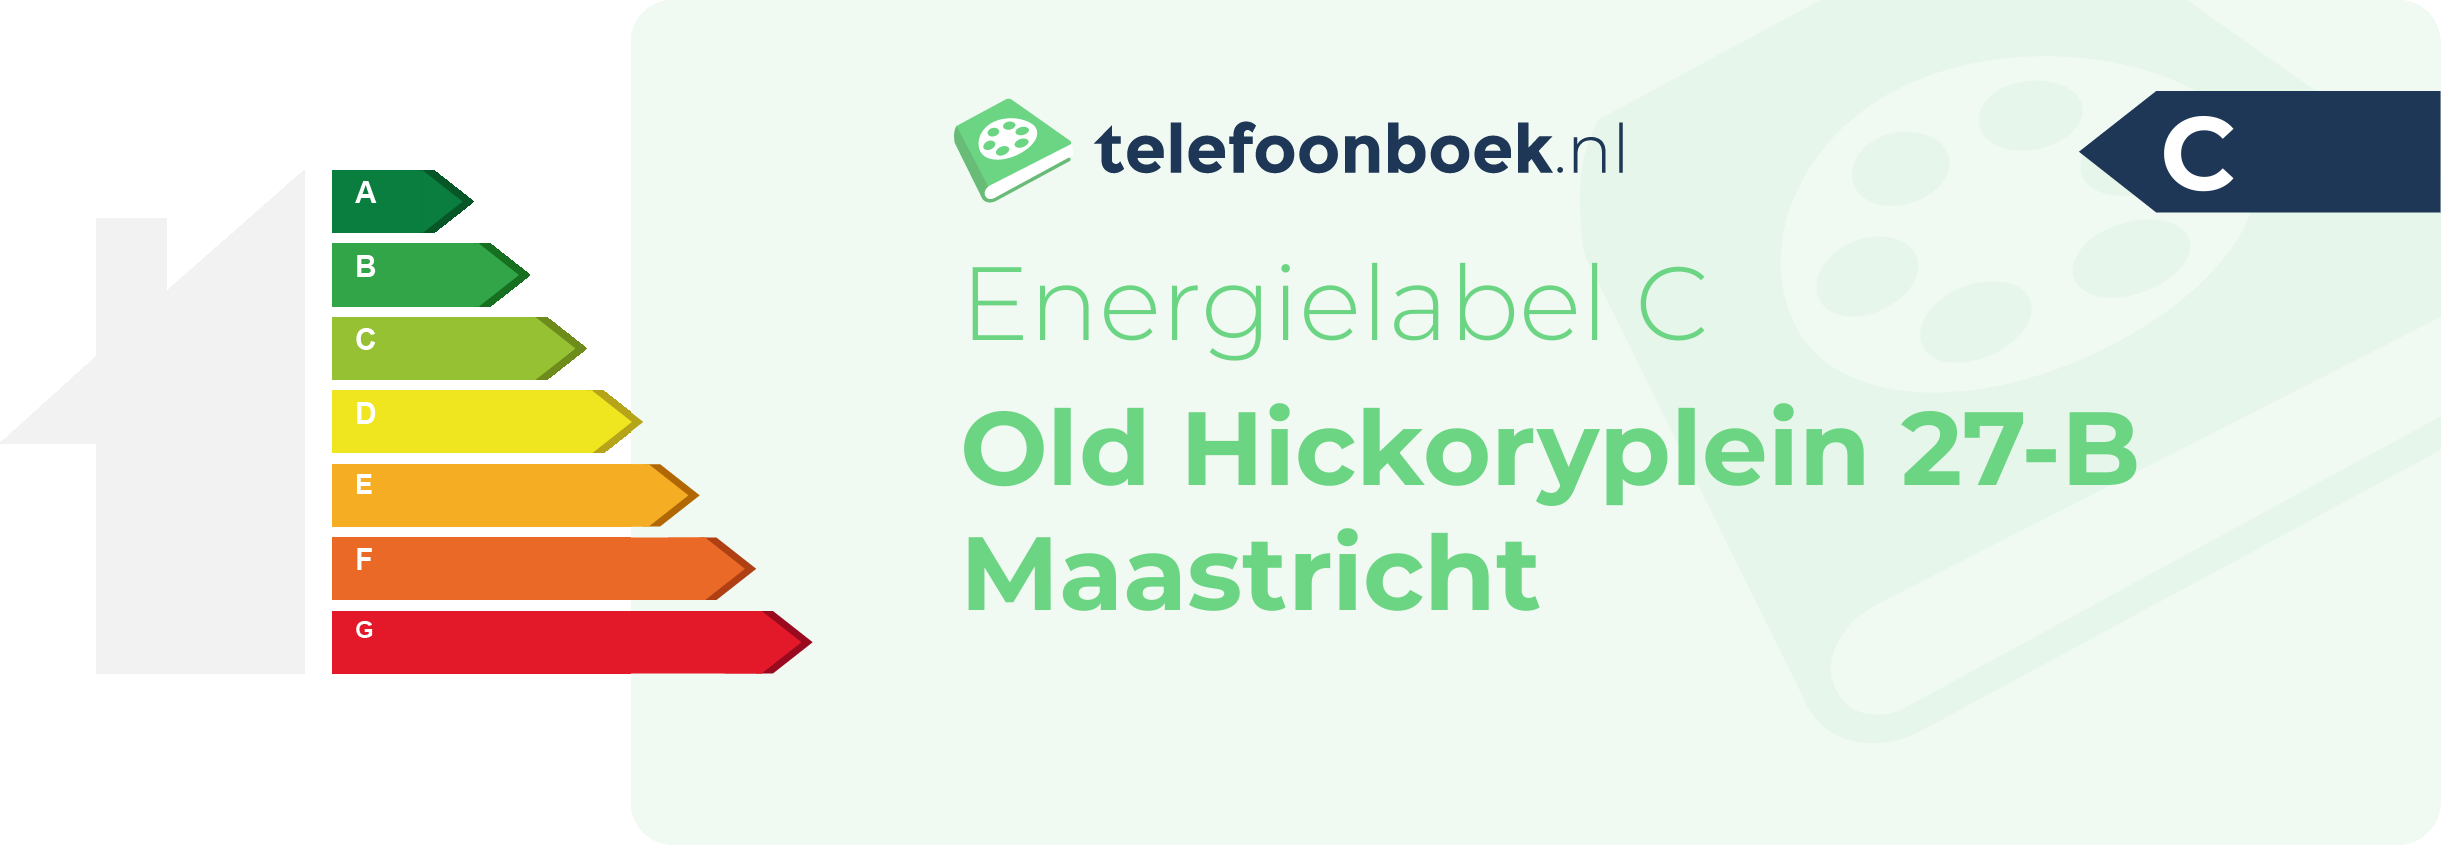 Energielabel Old Hickoryplein 27-B Maastricht